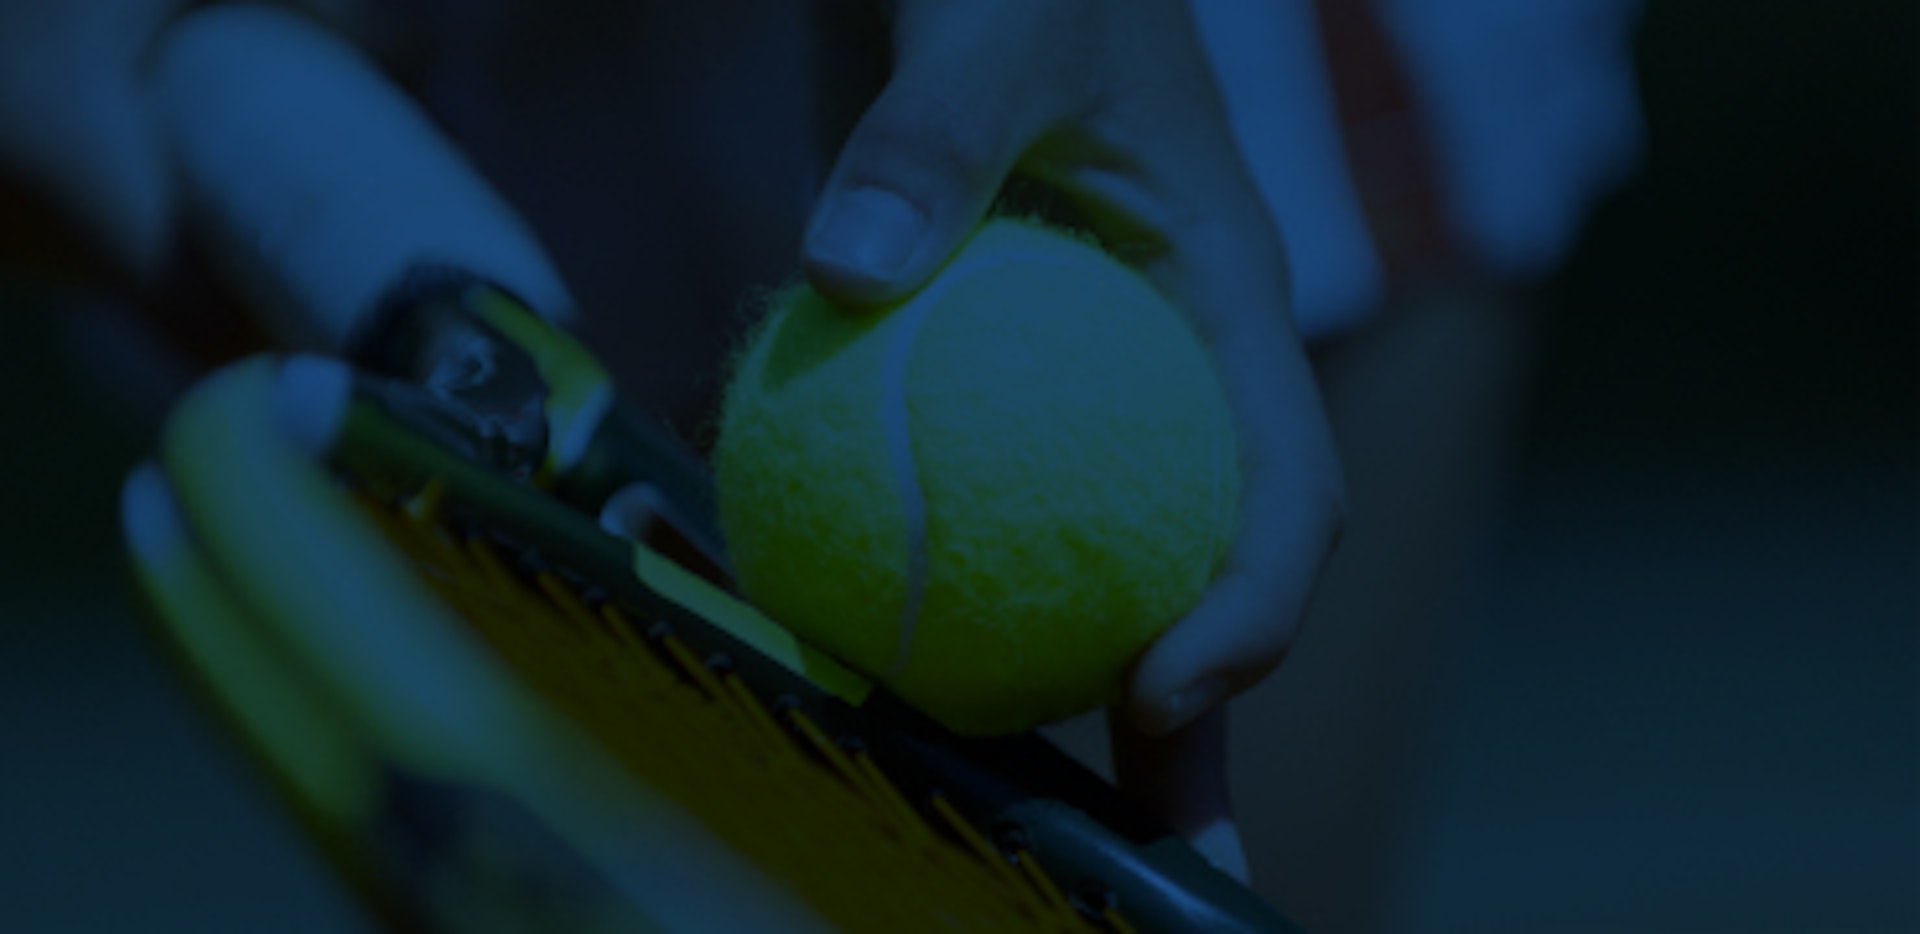 Women’s Tennis Association background image